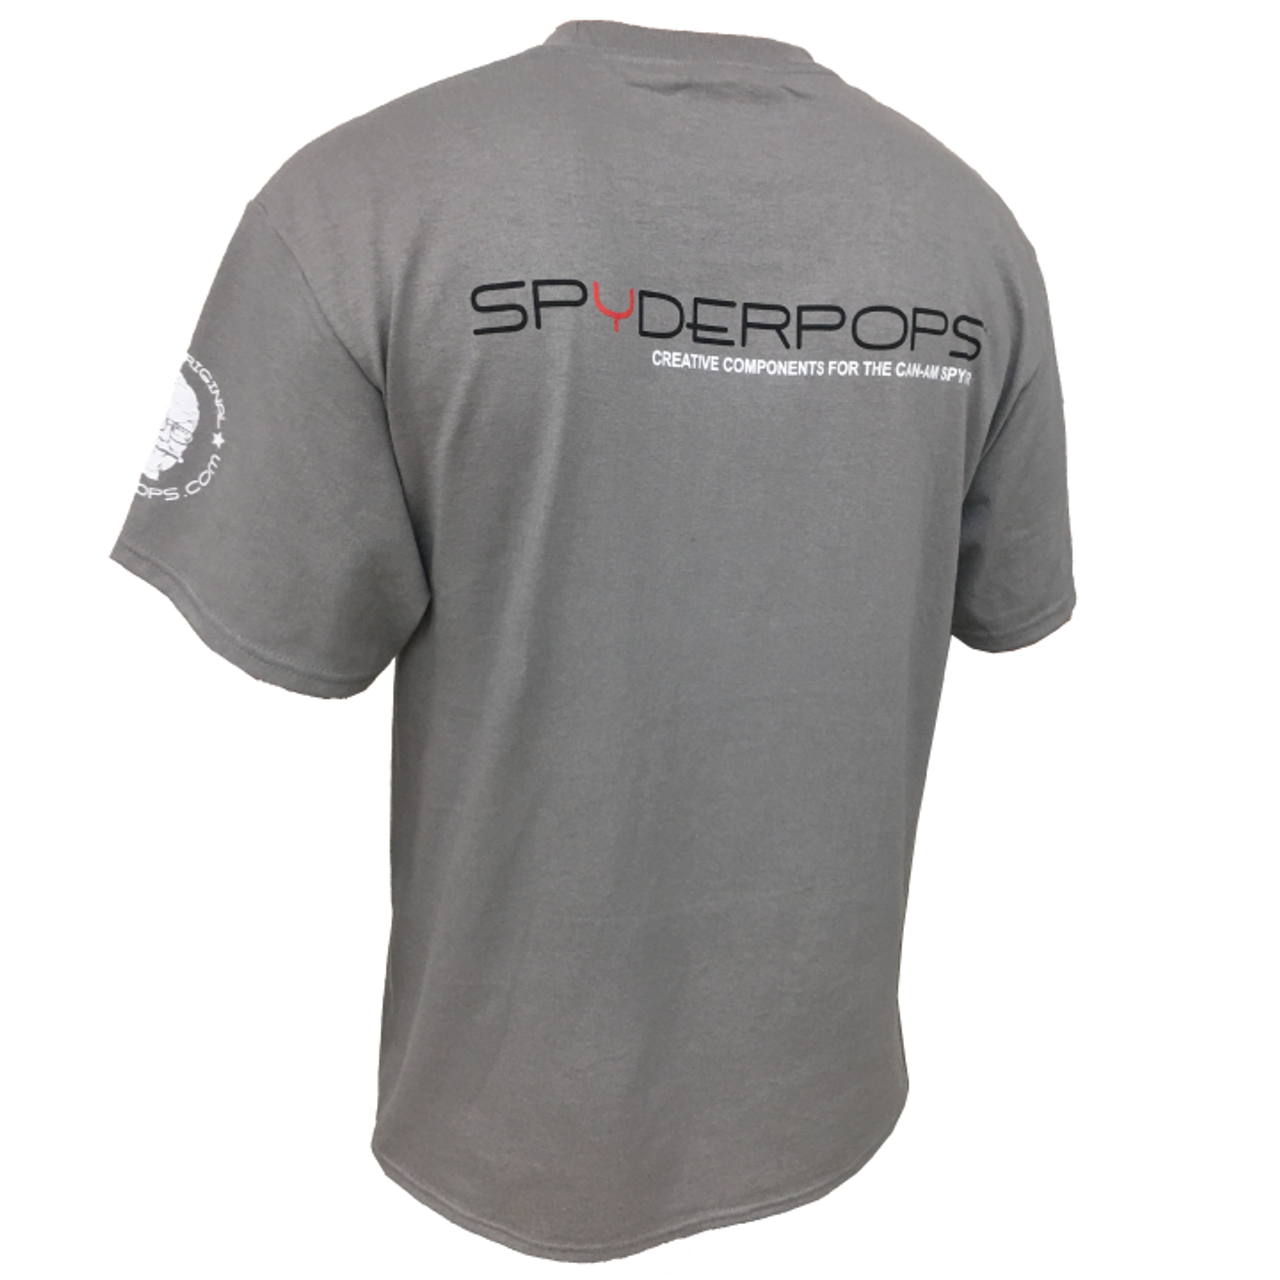 Spyderpops T-Shirt - Grey Short Sleeve (Multiple Sizes)